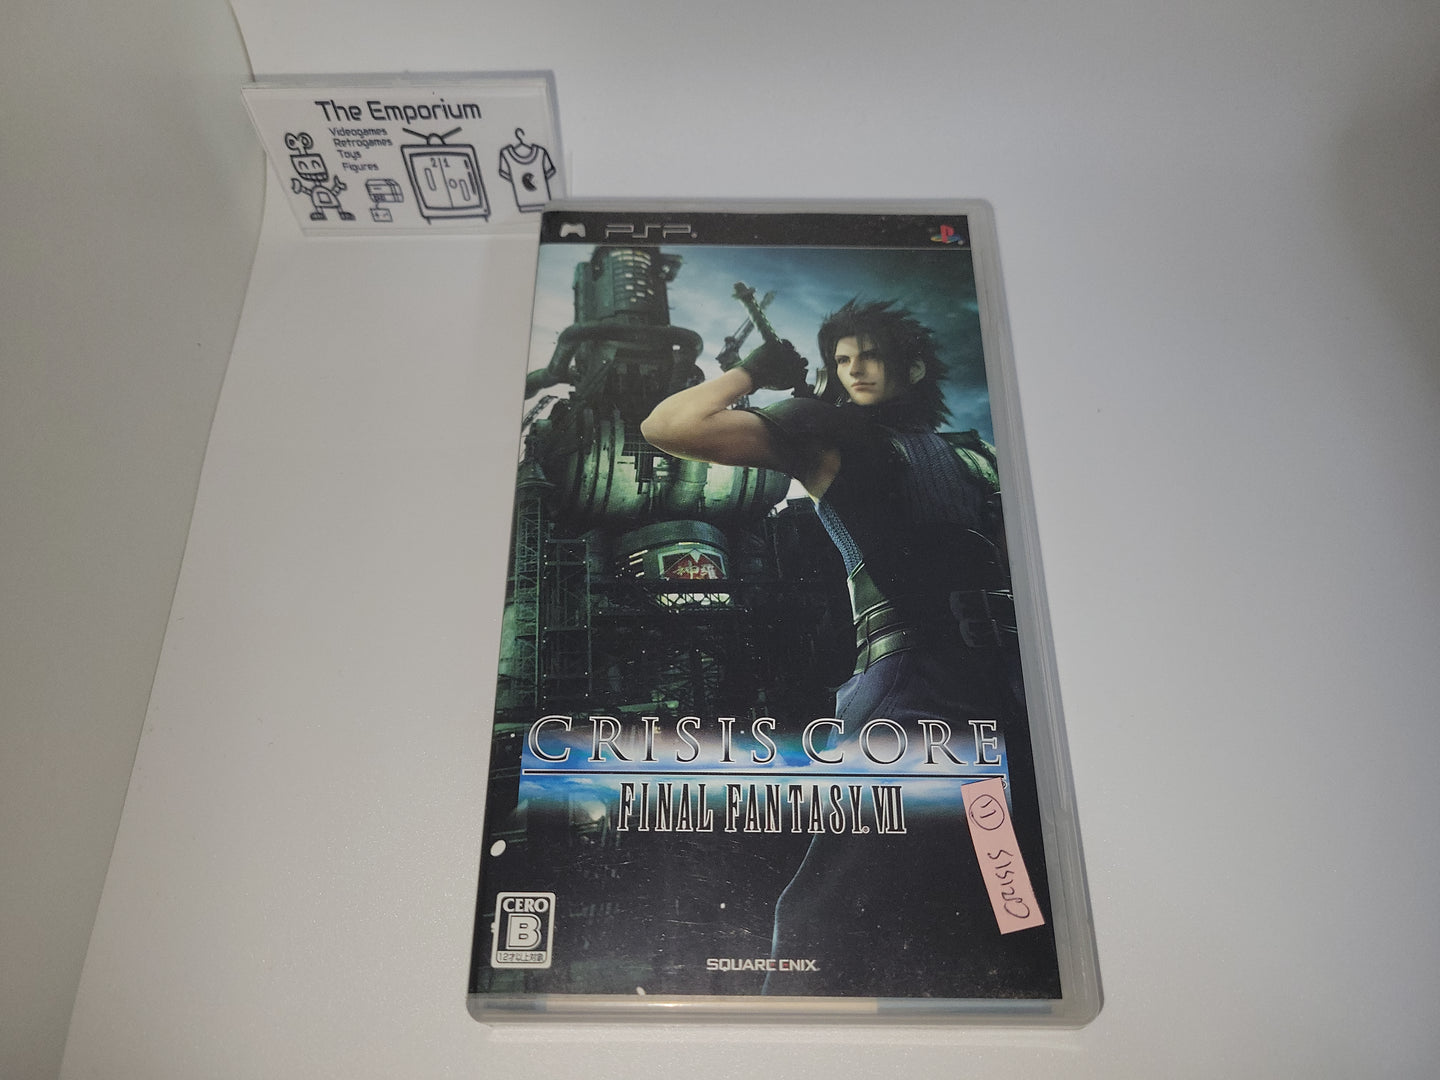 CrisisCore Final Fantasy VII - Sony PSP Playstation Portable